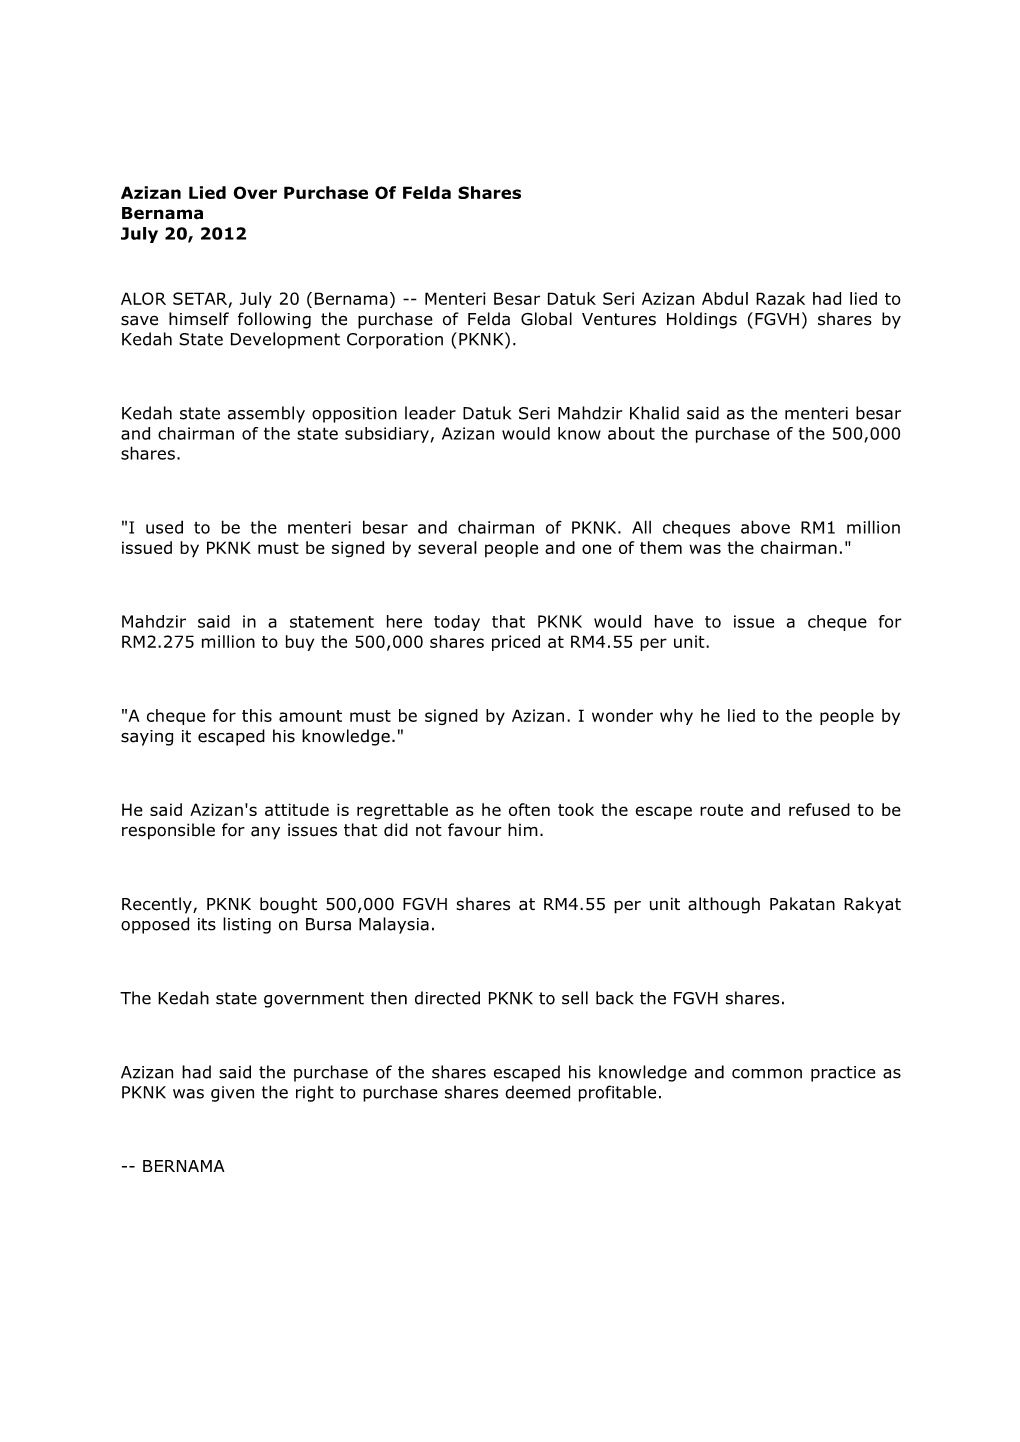 Azizan Lied Over Purchase of Felda Shares Bernama July 20, 2012